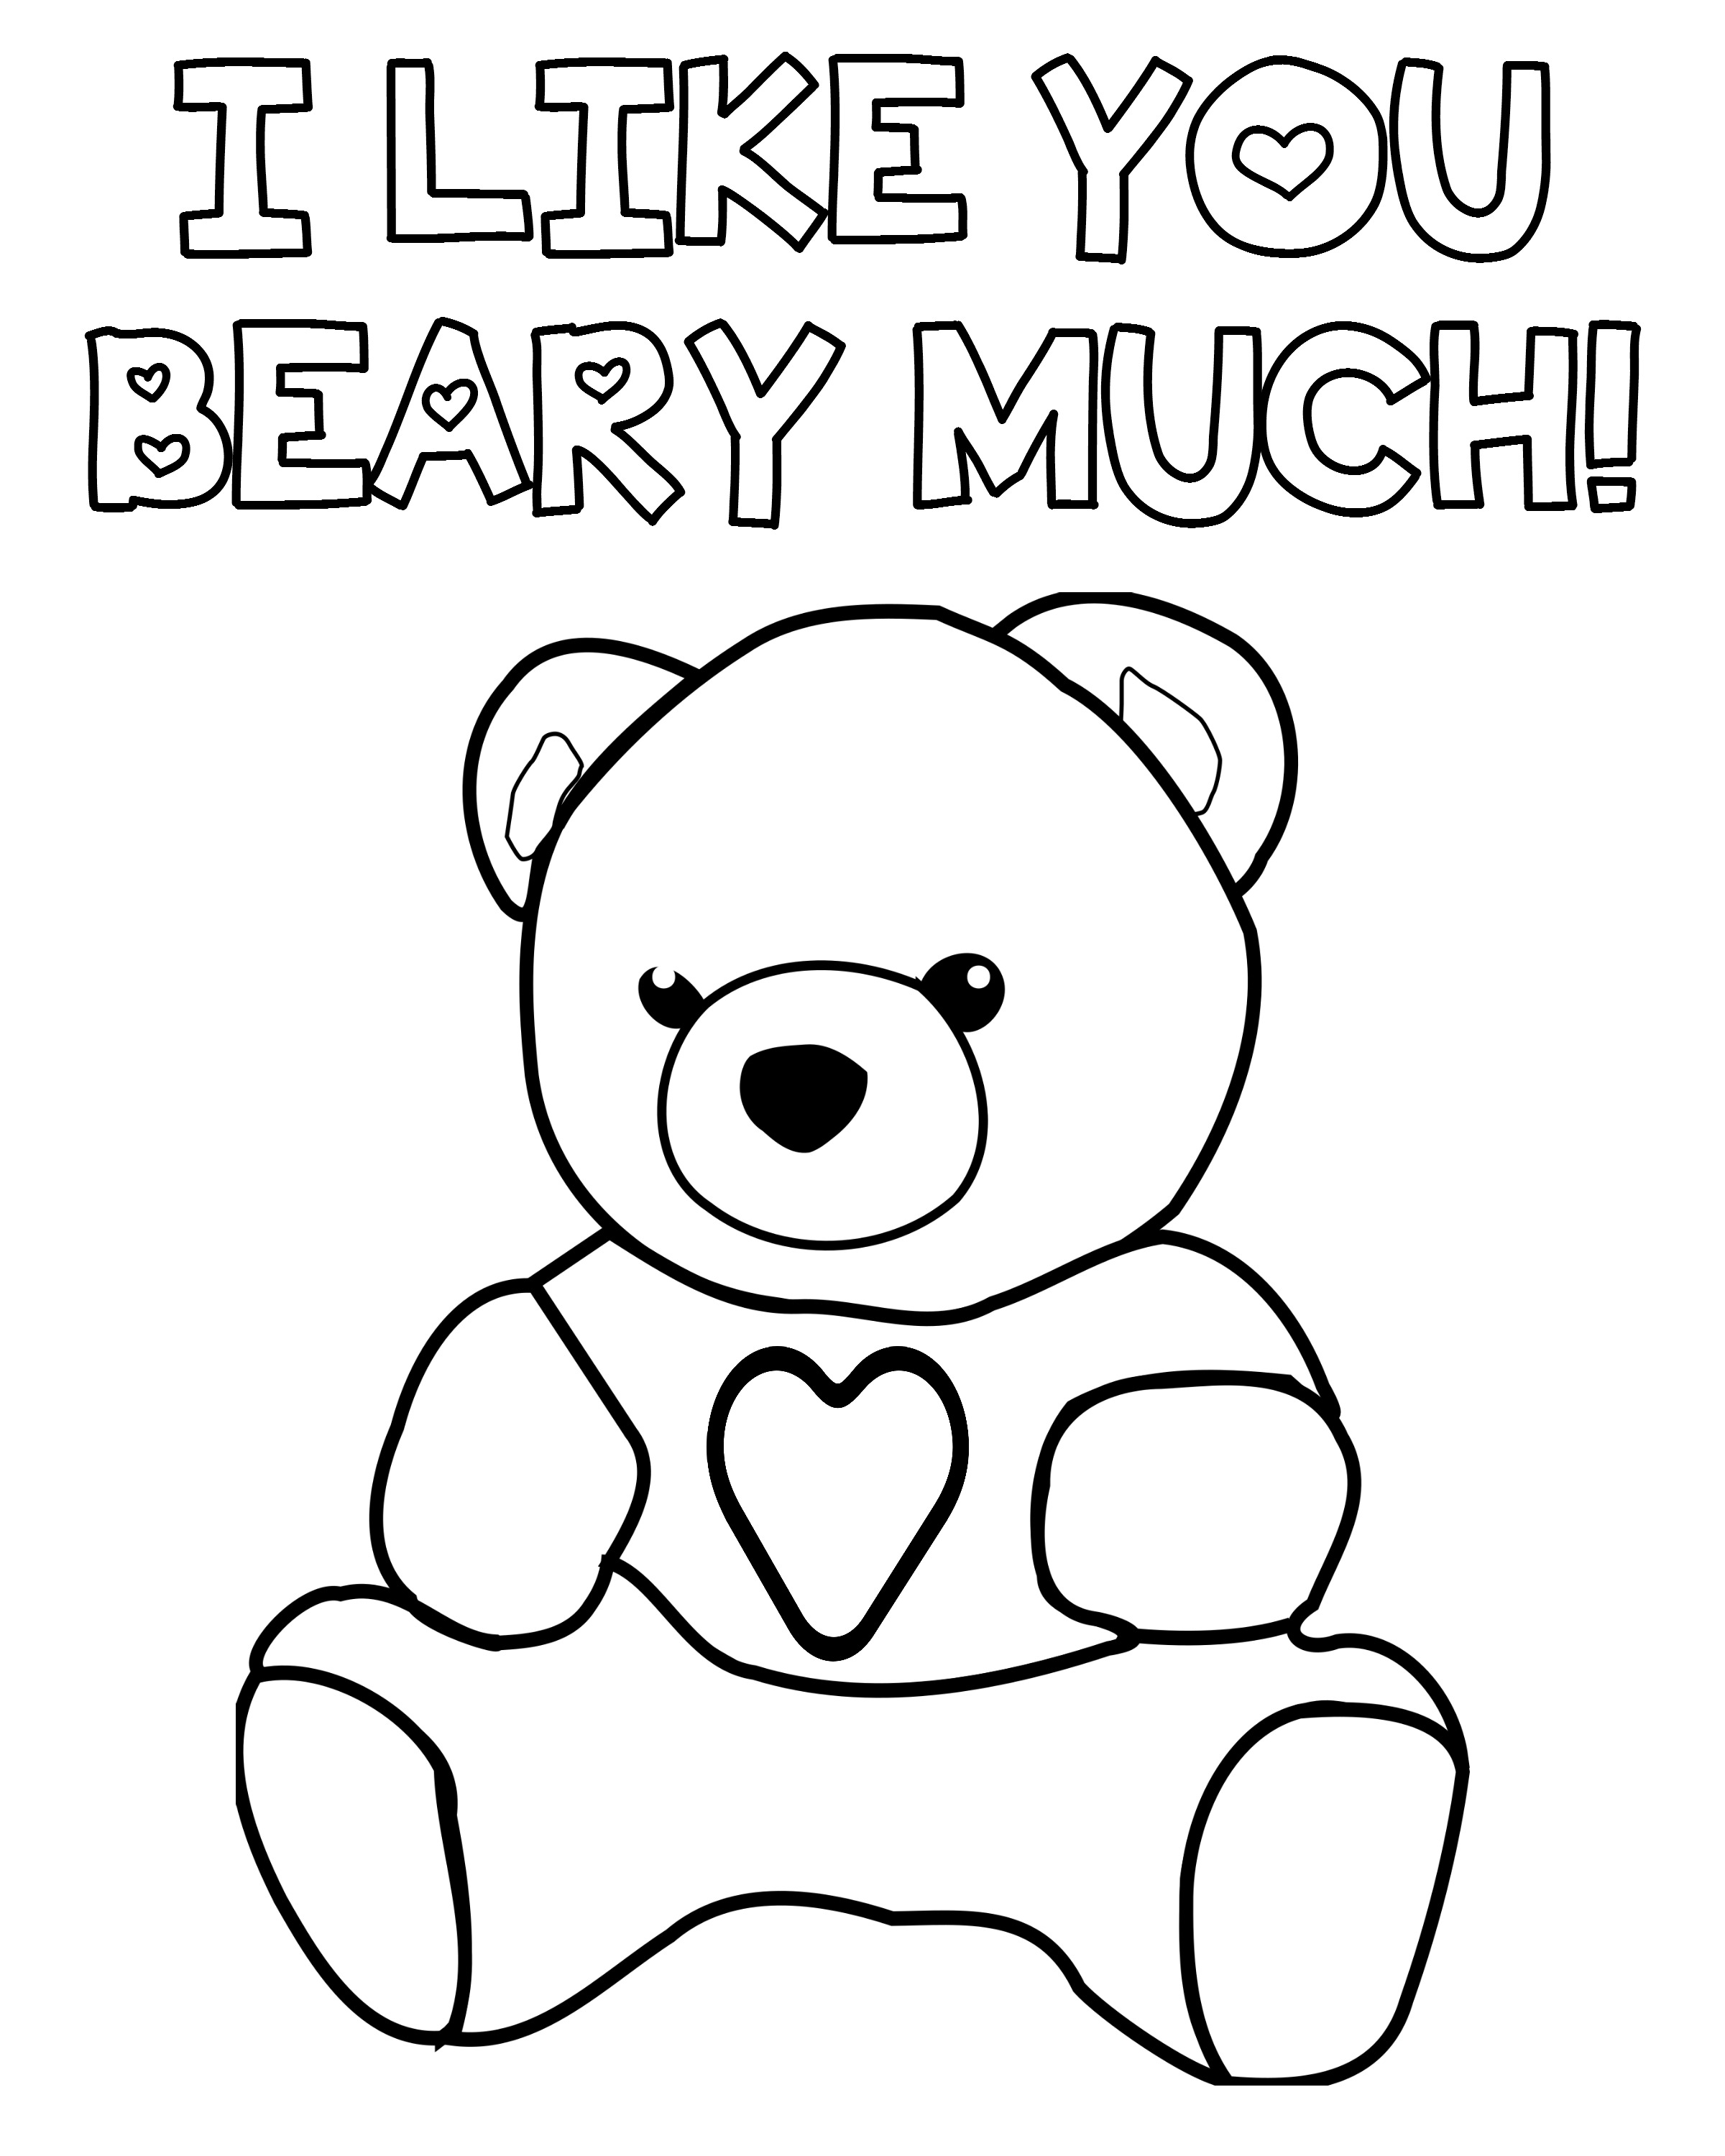 I like you beary much